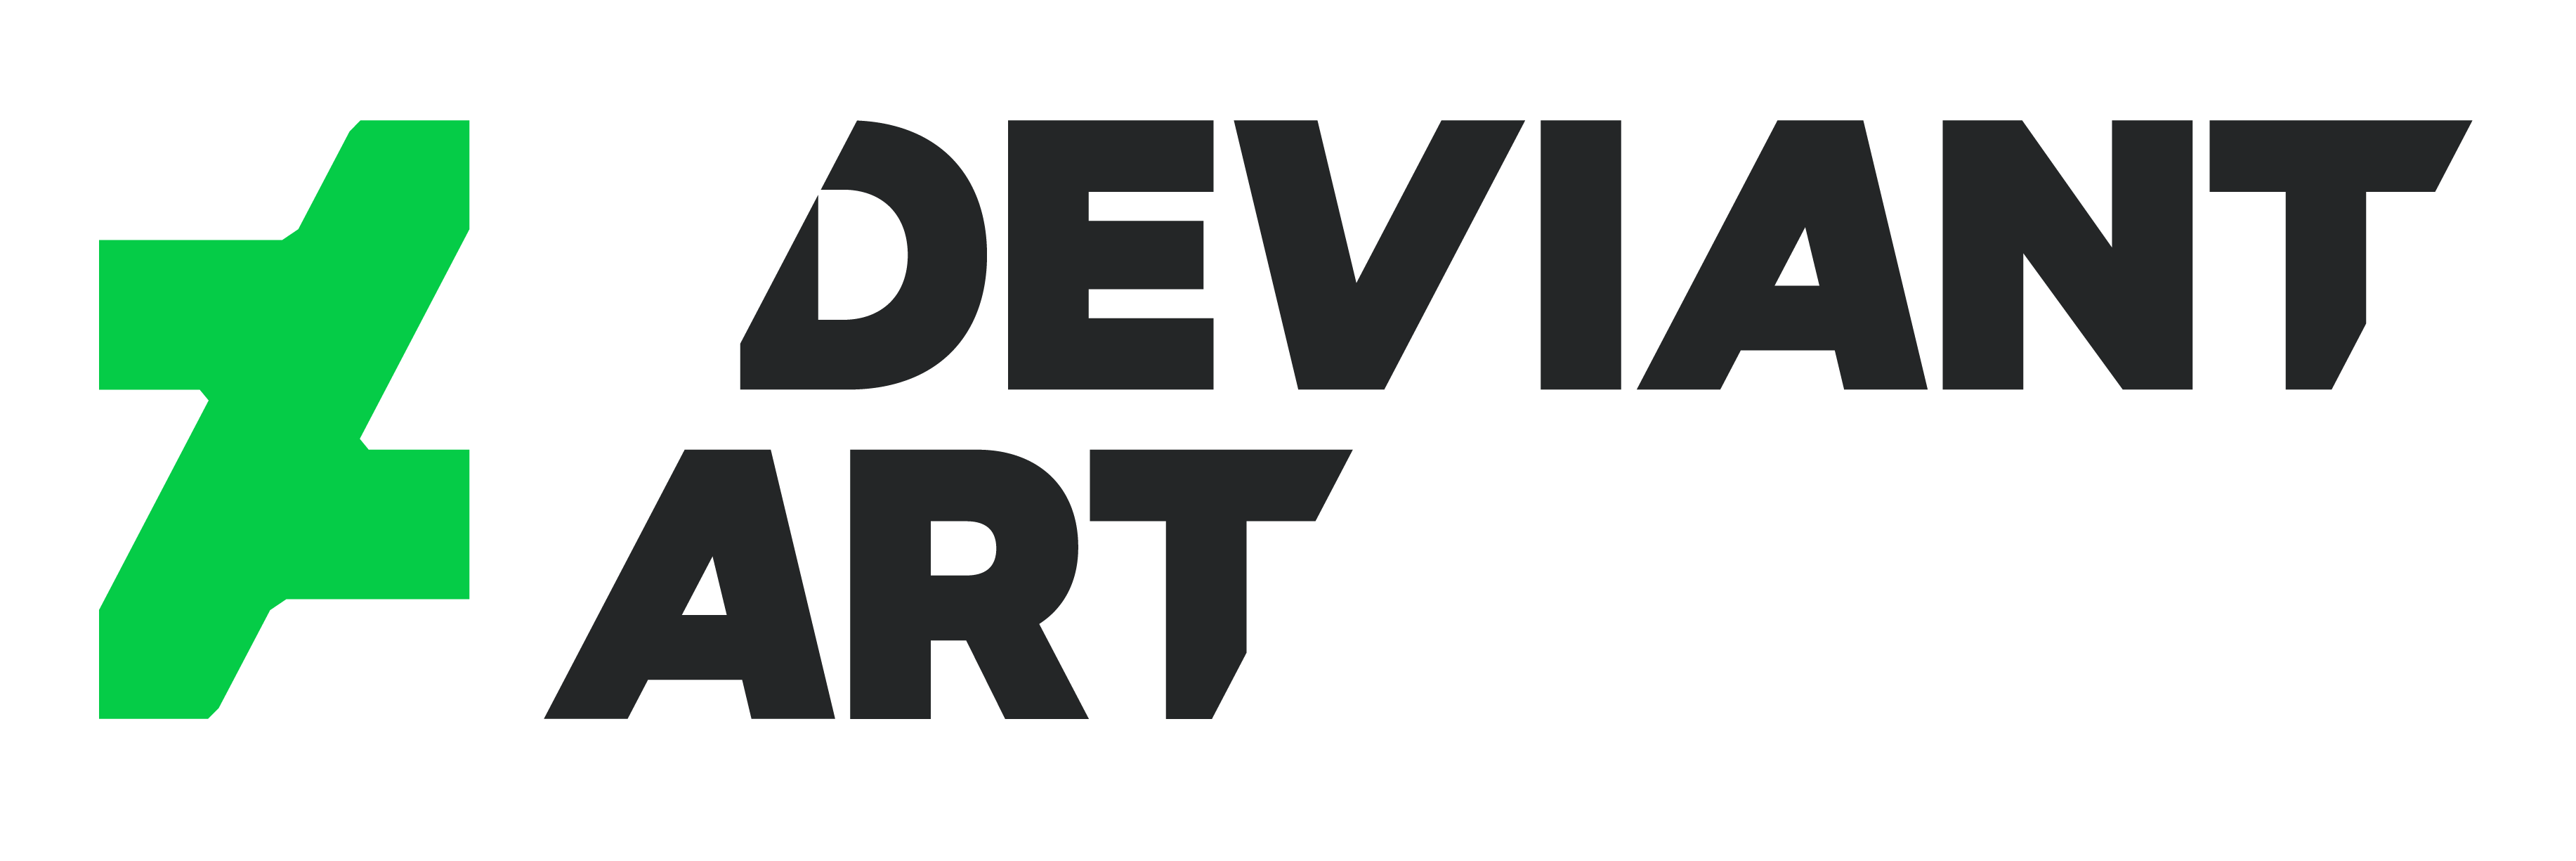 Deviantart Logo PNG Clipart Background